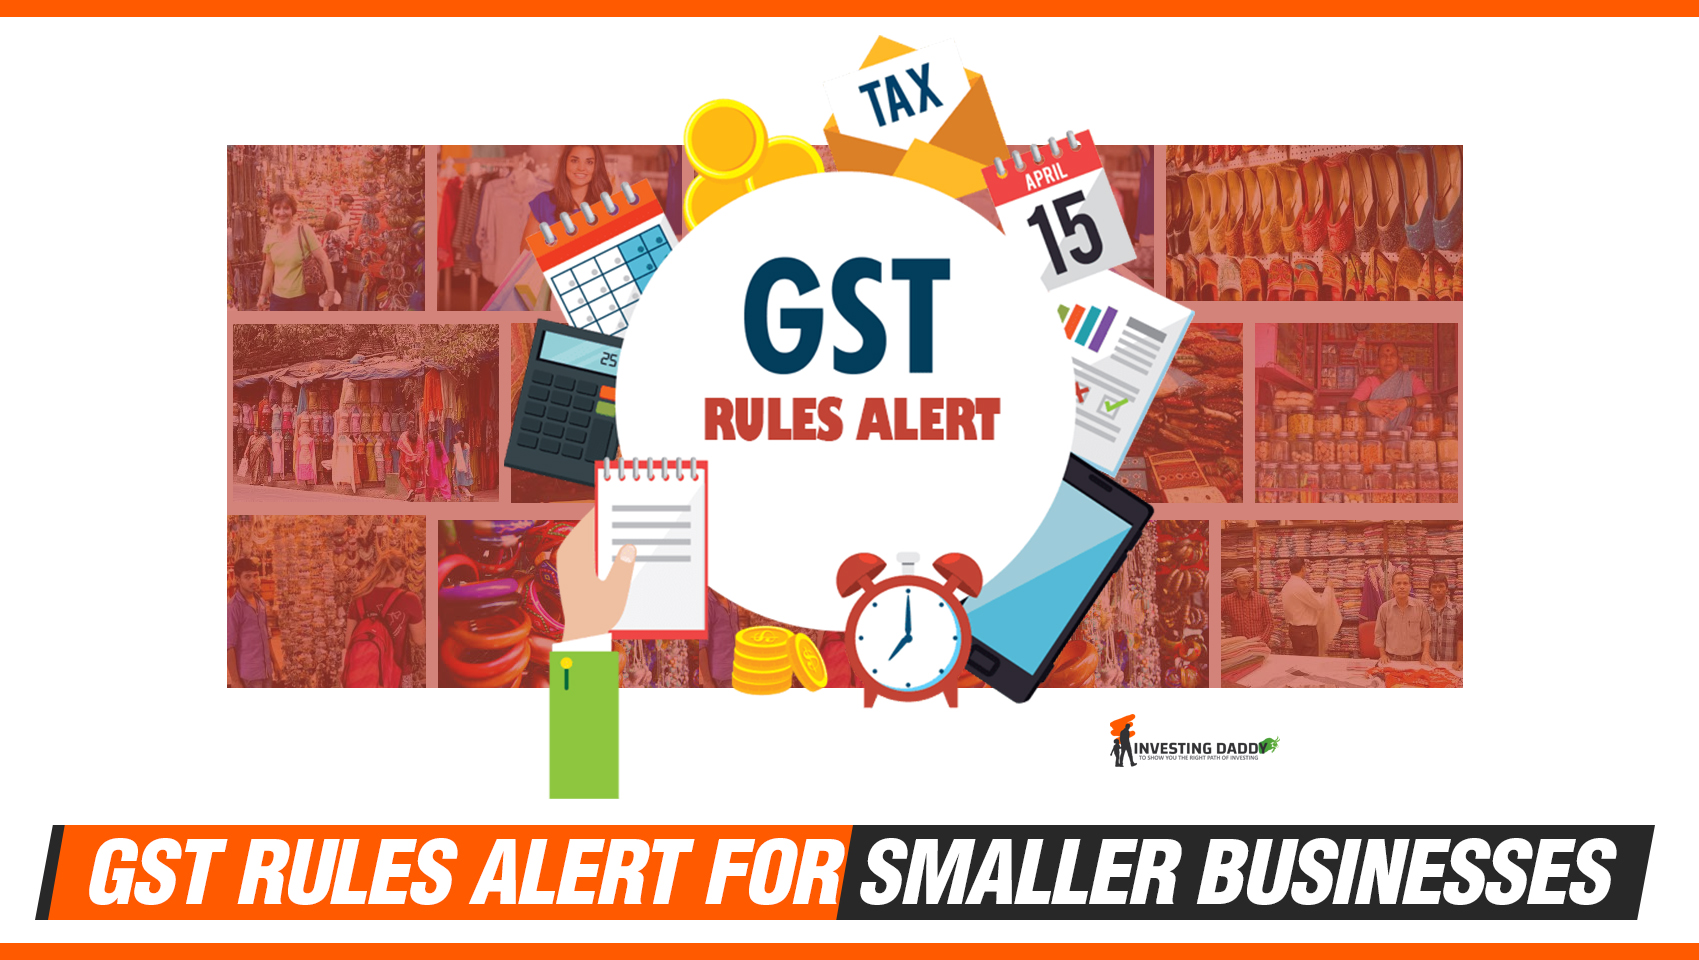 GST RULES ALERT FOR SMALLER BUSINESSES